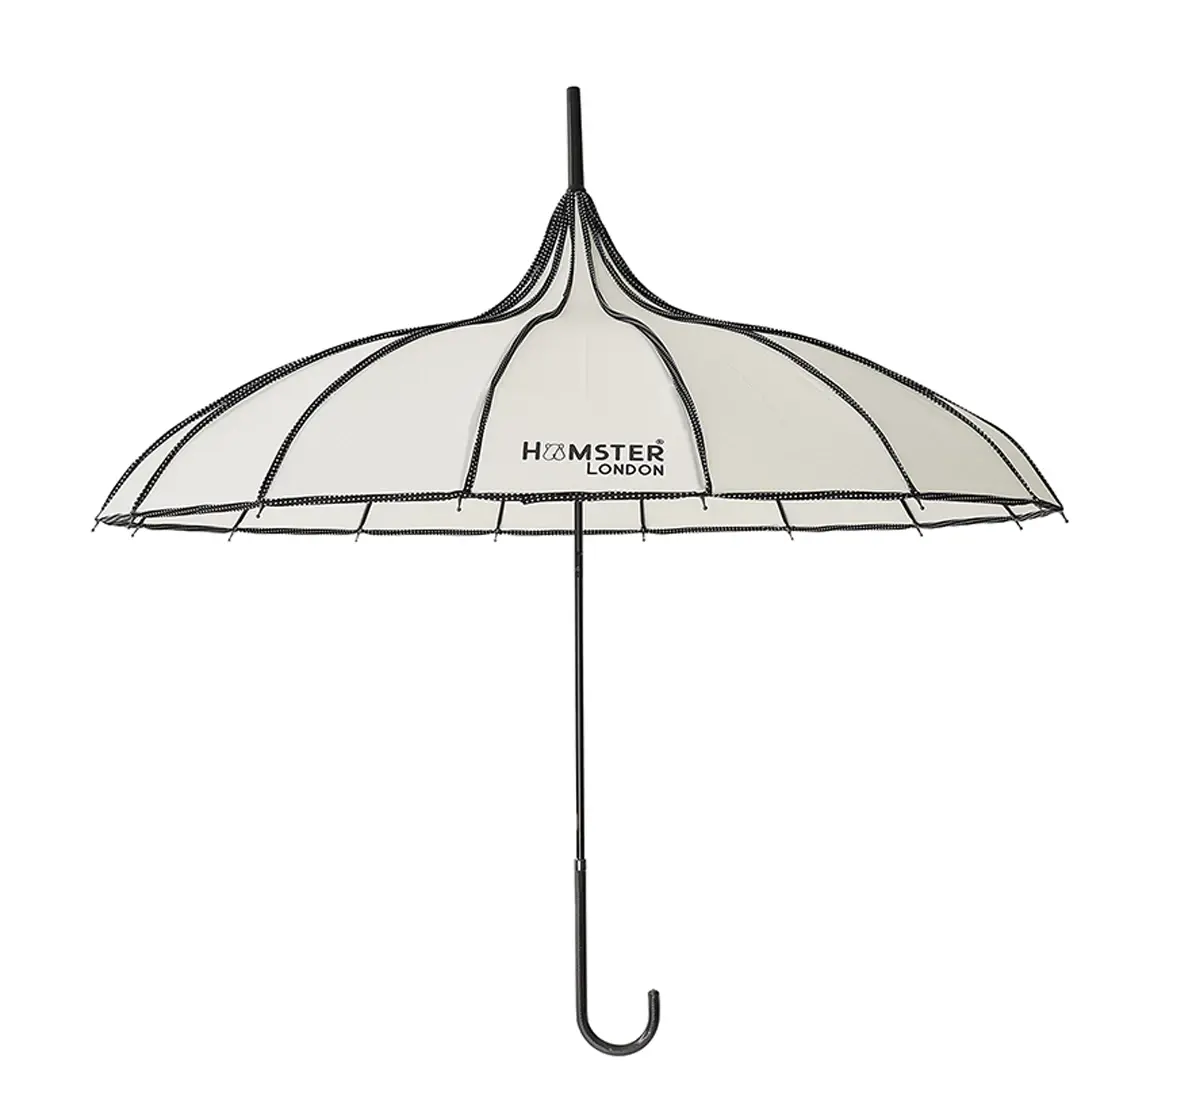 Fashionable Stunning Rustproof Sturdy Umbrella by Hamster London, White, 10Y+